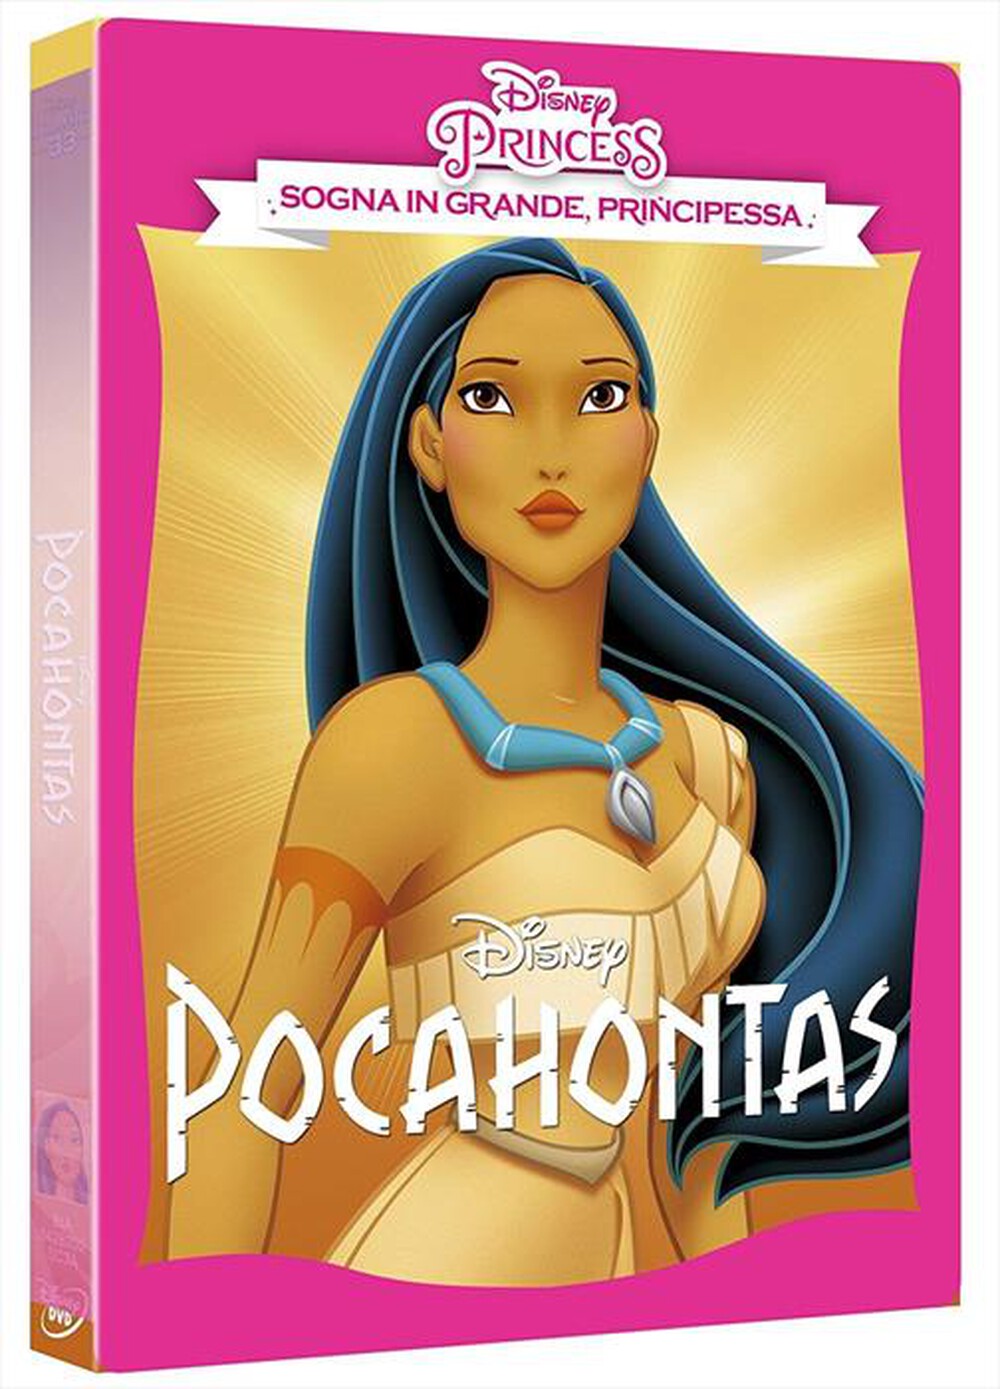 "WALT DISNEY - Pocahontas"